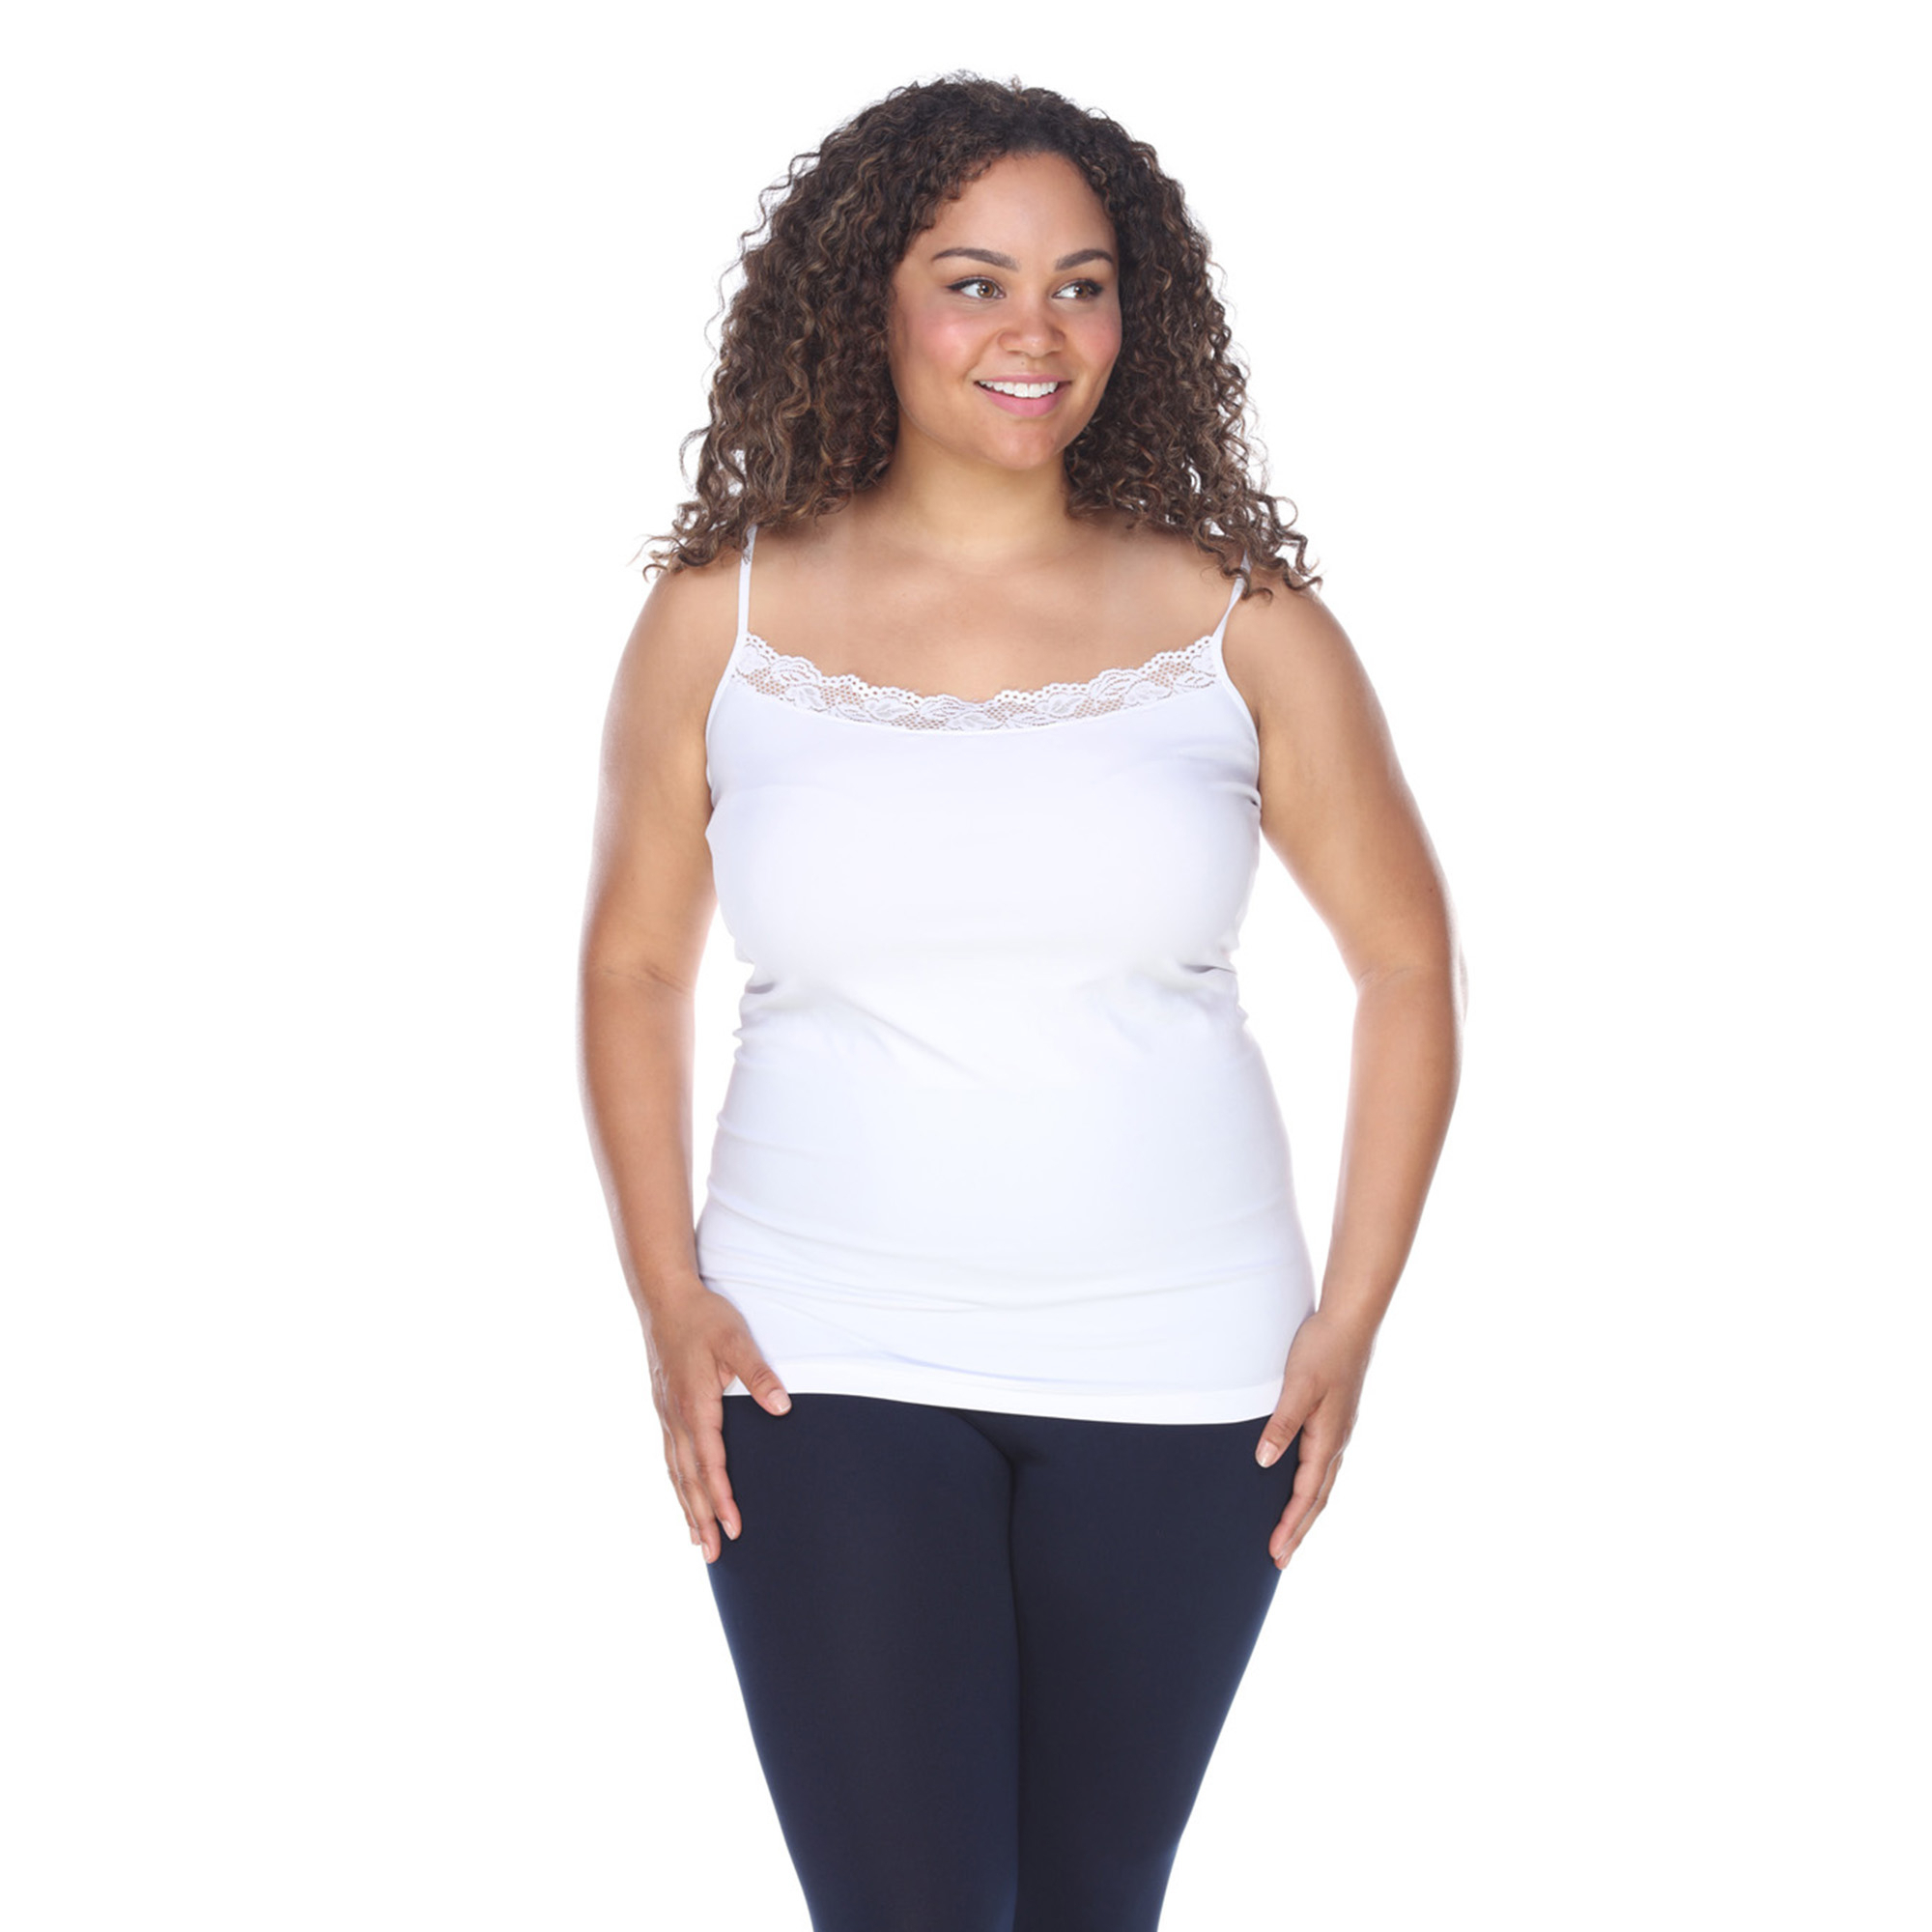 White Mark Womenâs Plus Size Lace Trim Tank Top - White